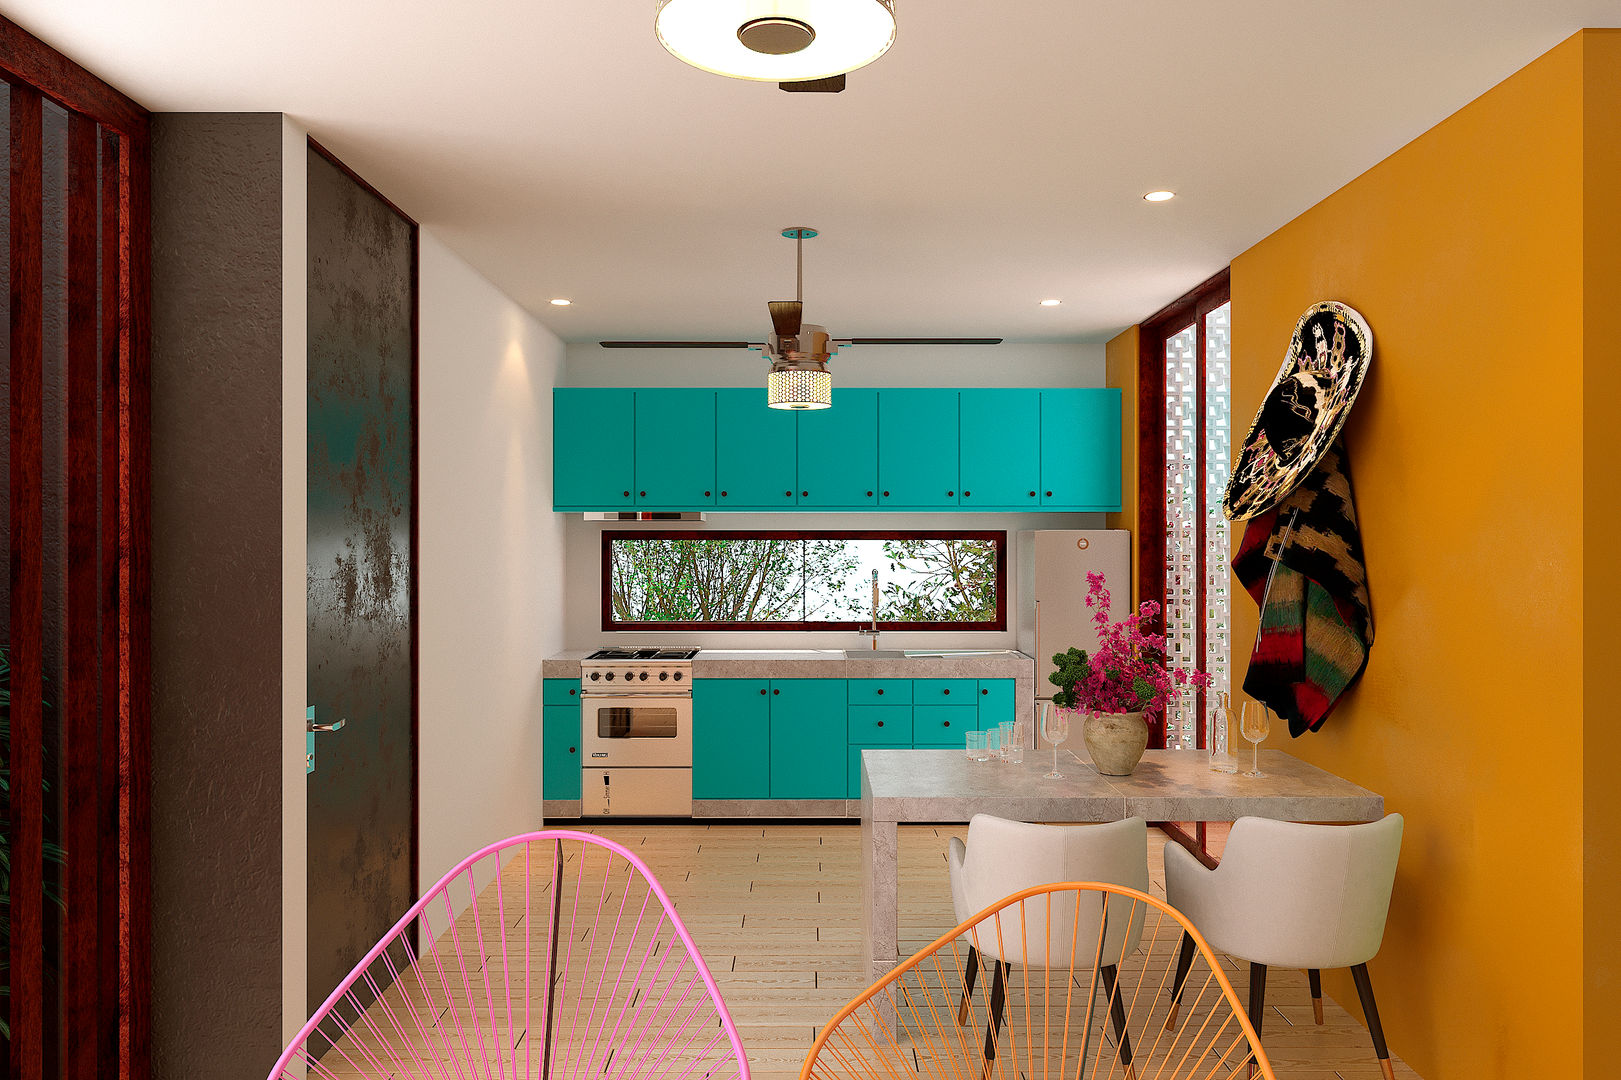 Cocina Laboratorio Mexicano de Arquitectura Cocinas pequeñas Concreto cocina,amarillo,azul,mexicana,sillas